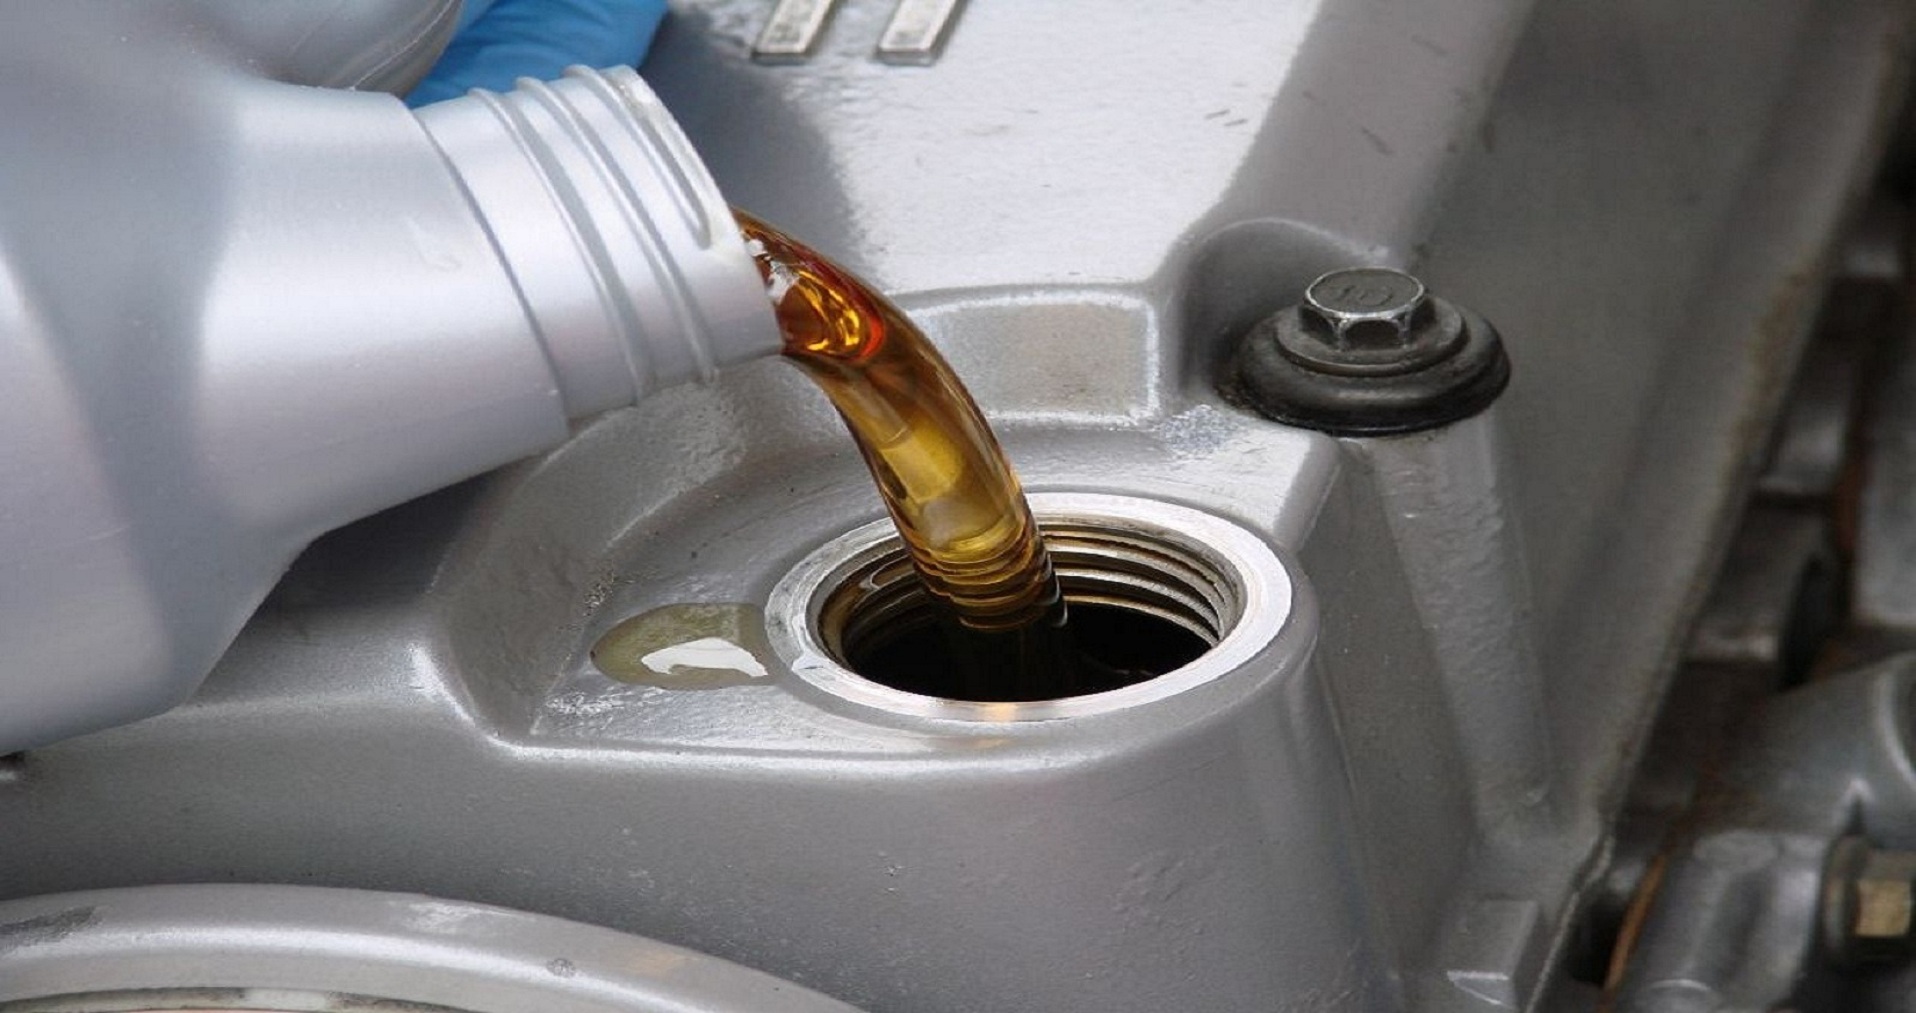 changing motor oil